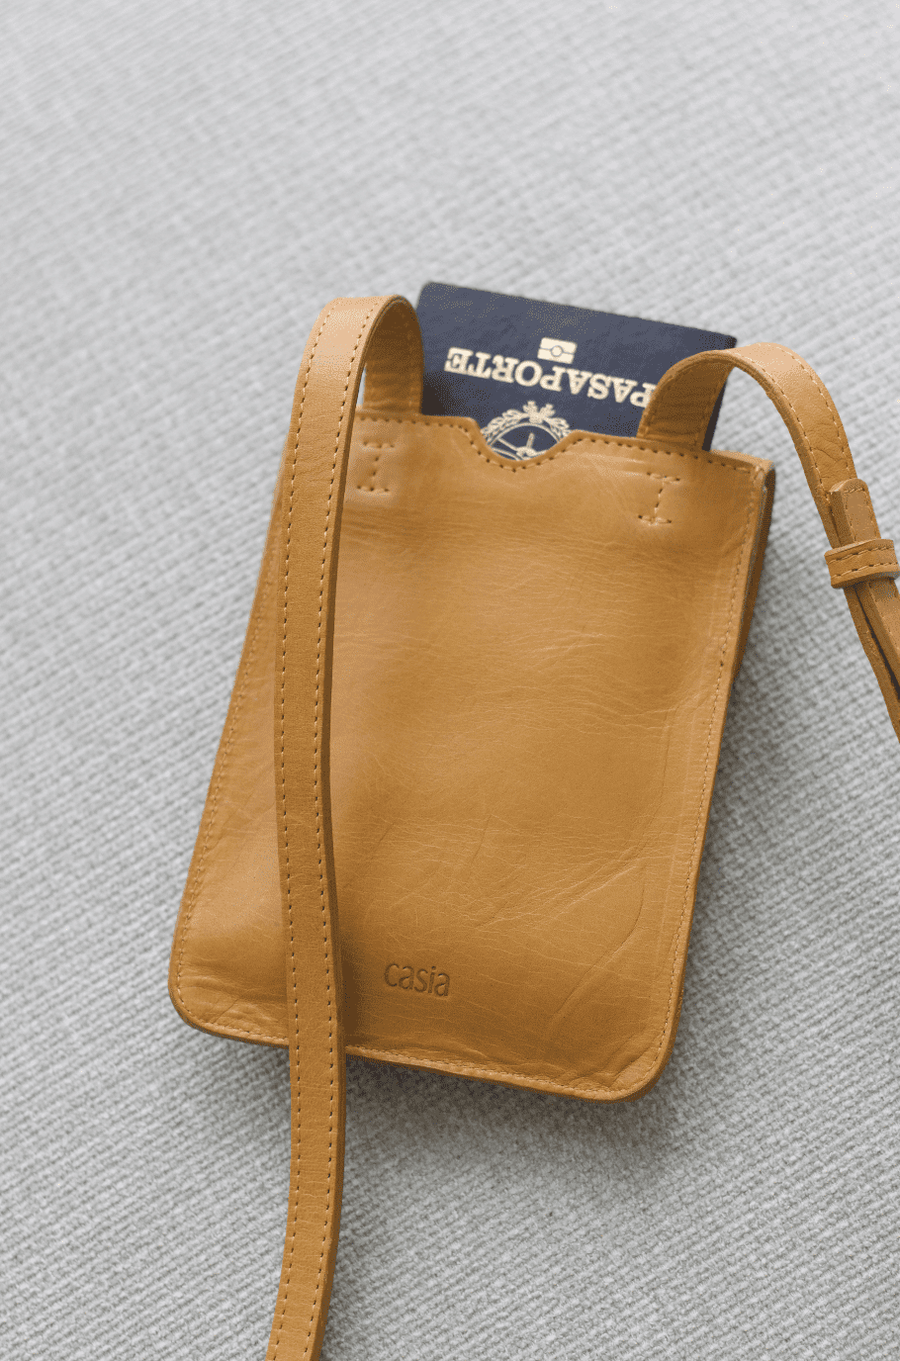 Mini leather bag. Shoulder bag. Full grain leather bag. Vegetable tanned leather purse.